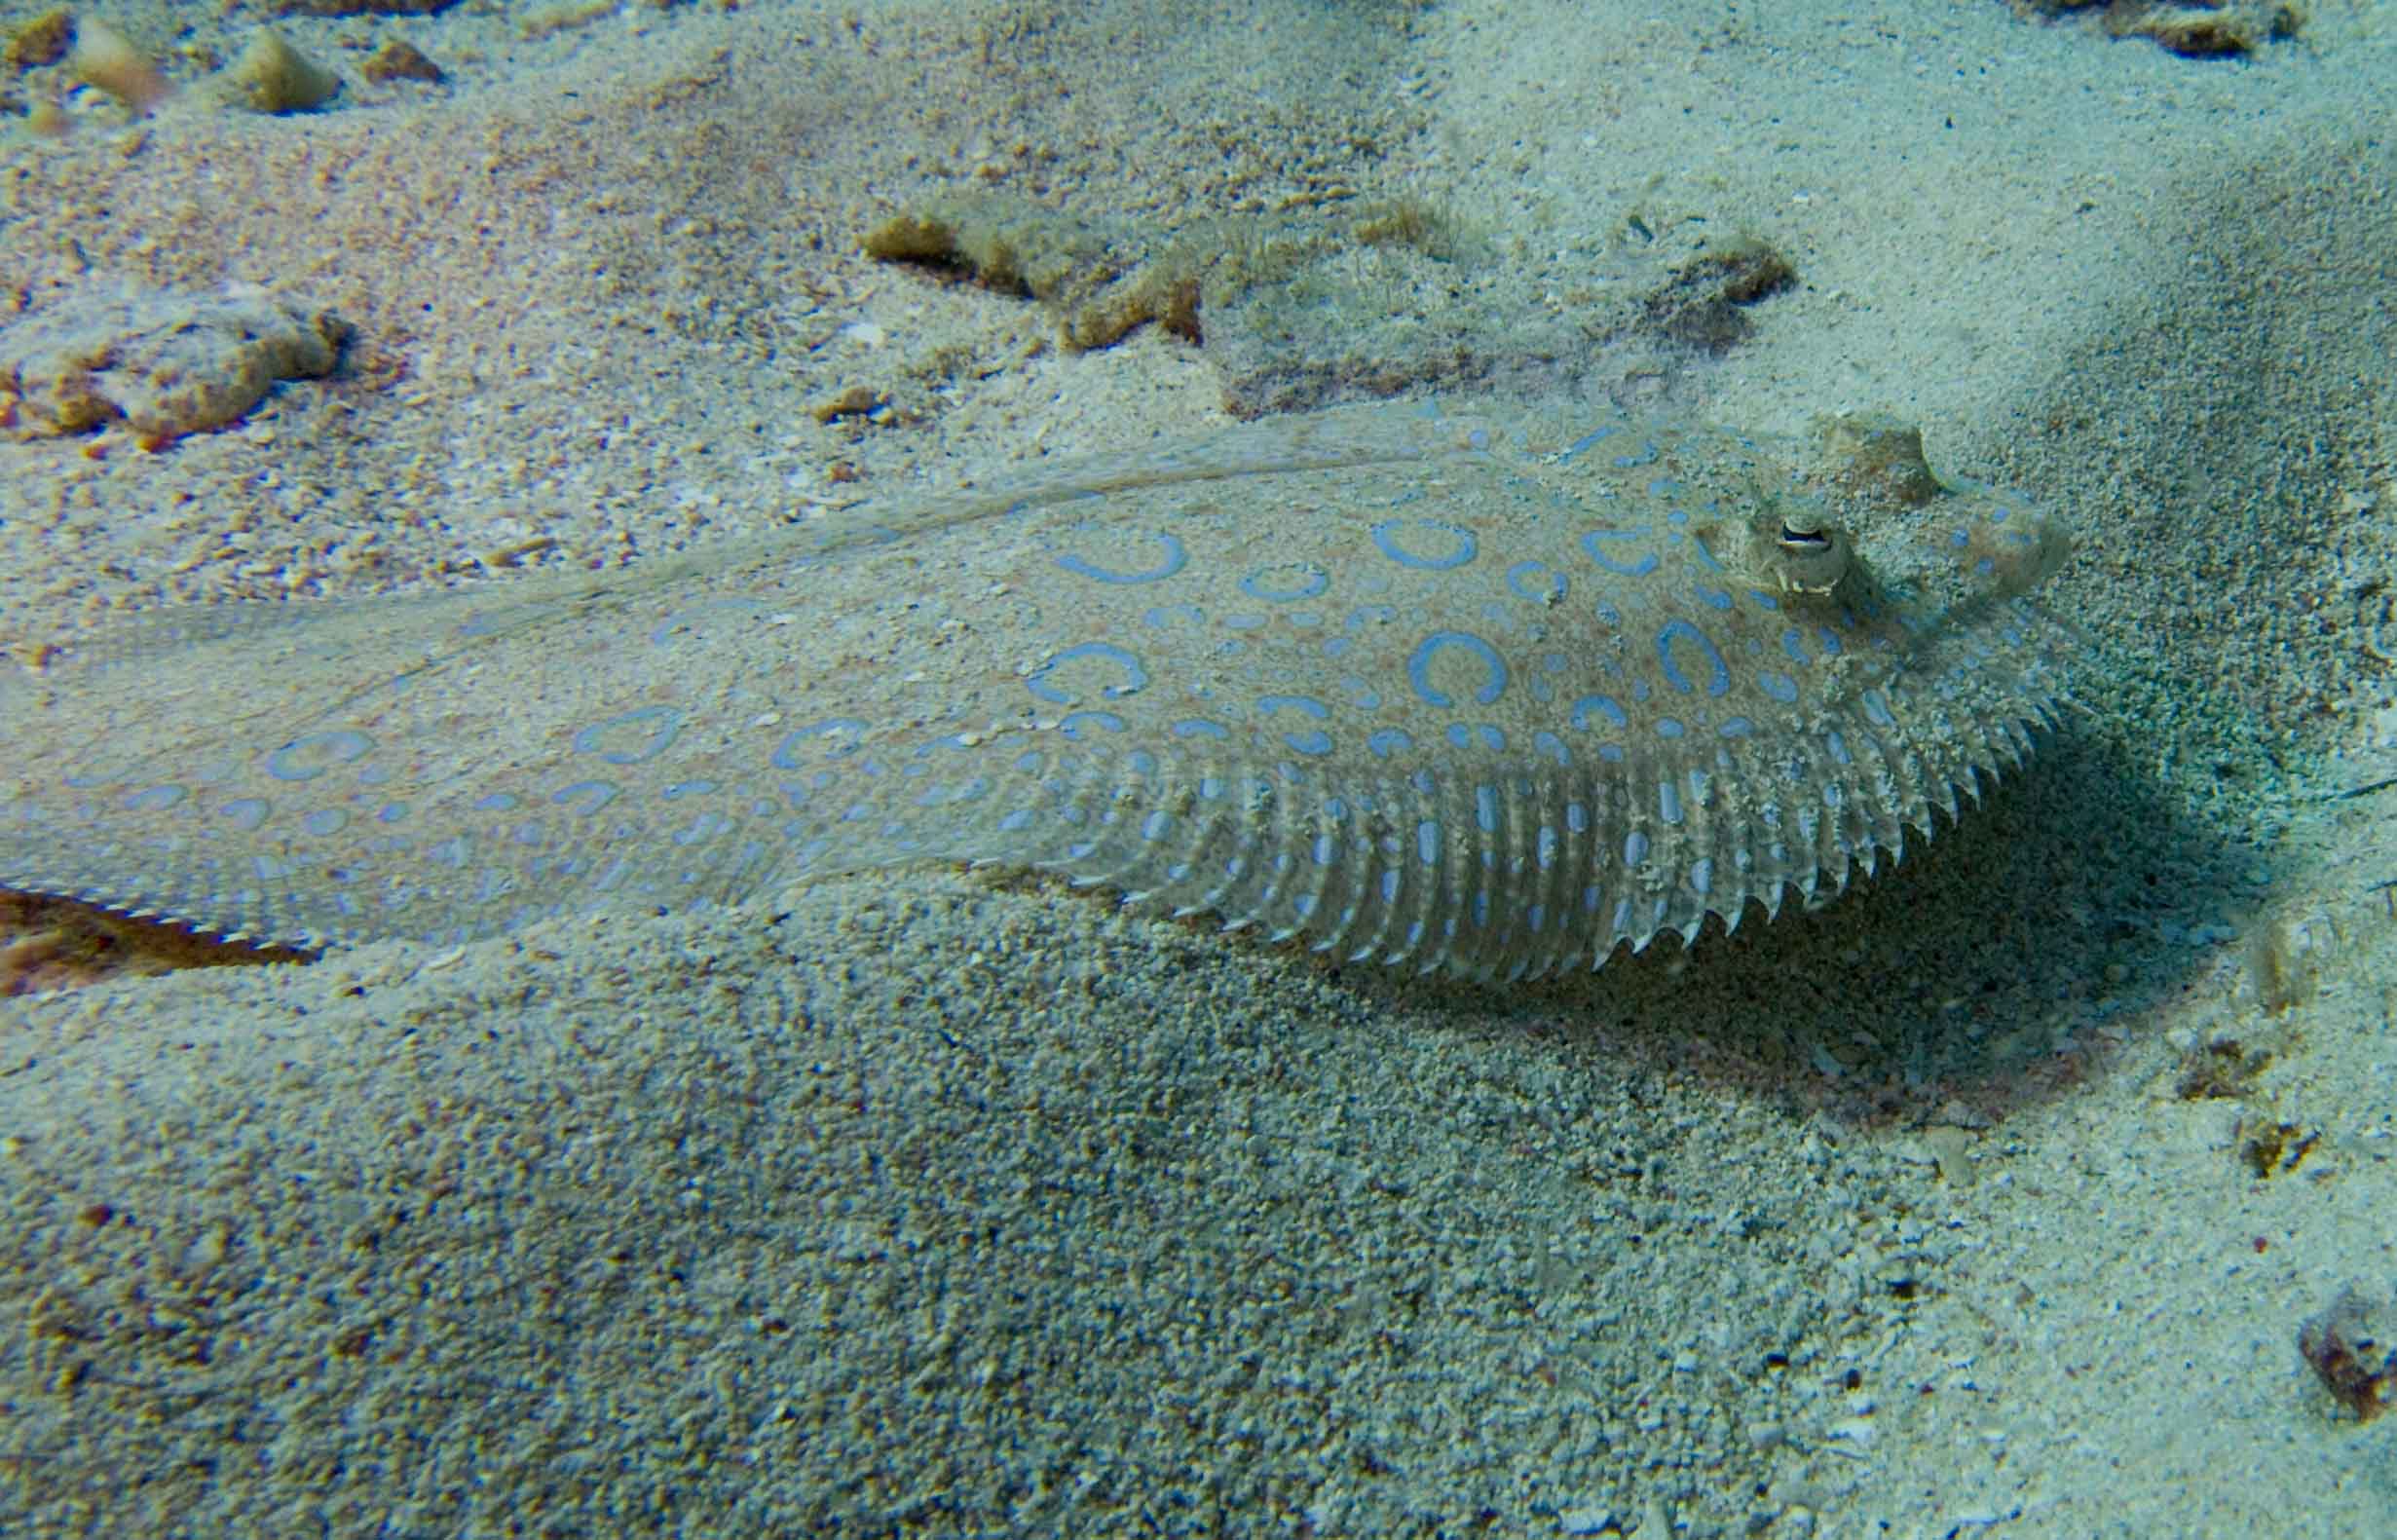 Peacock Flounder